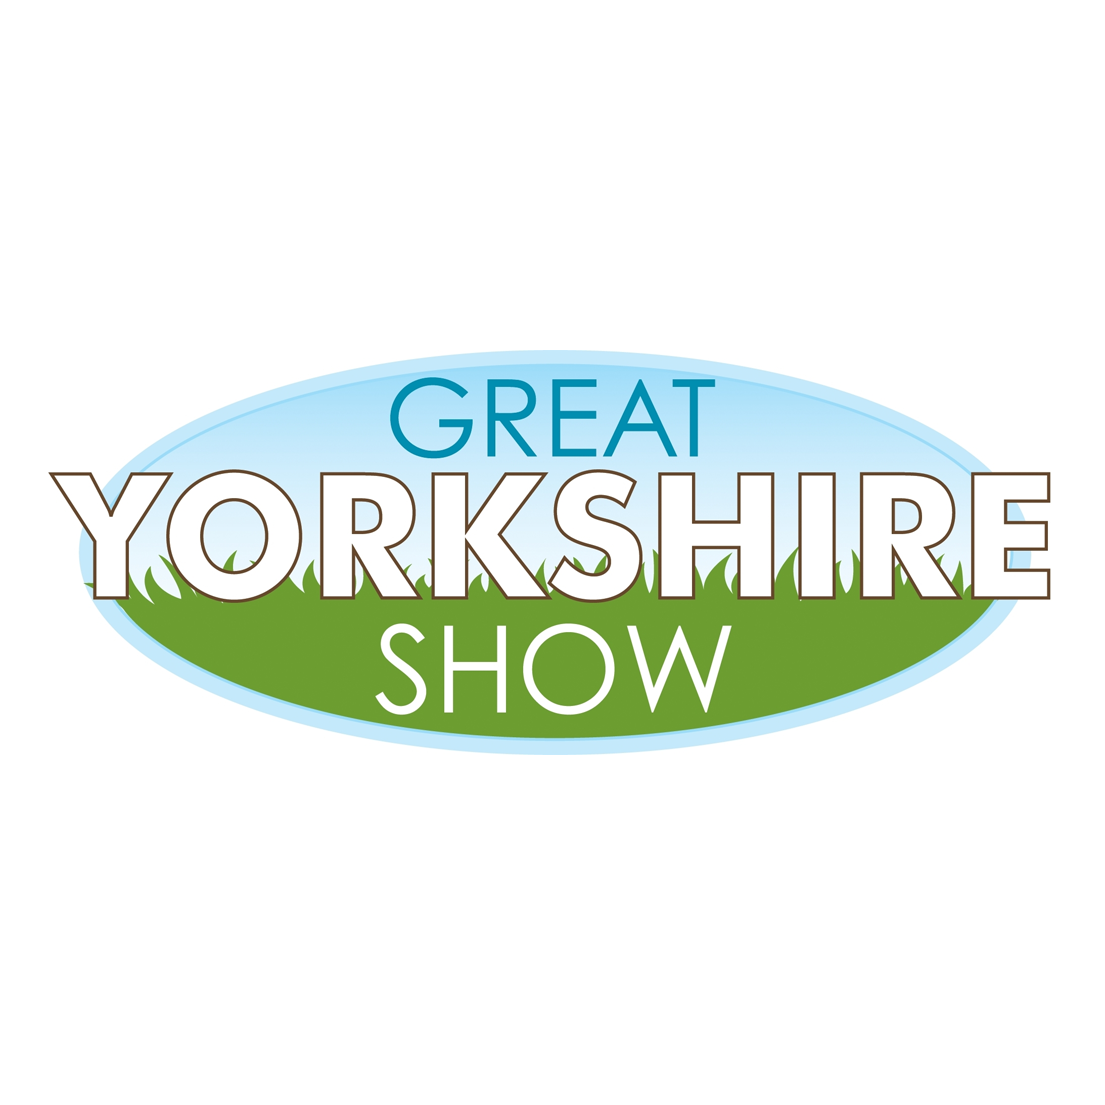 Royal Yorkshire Show